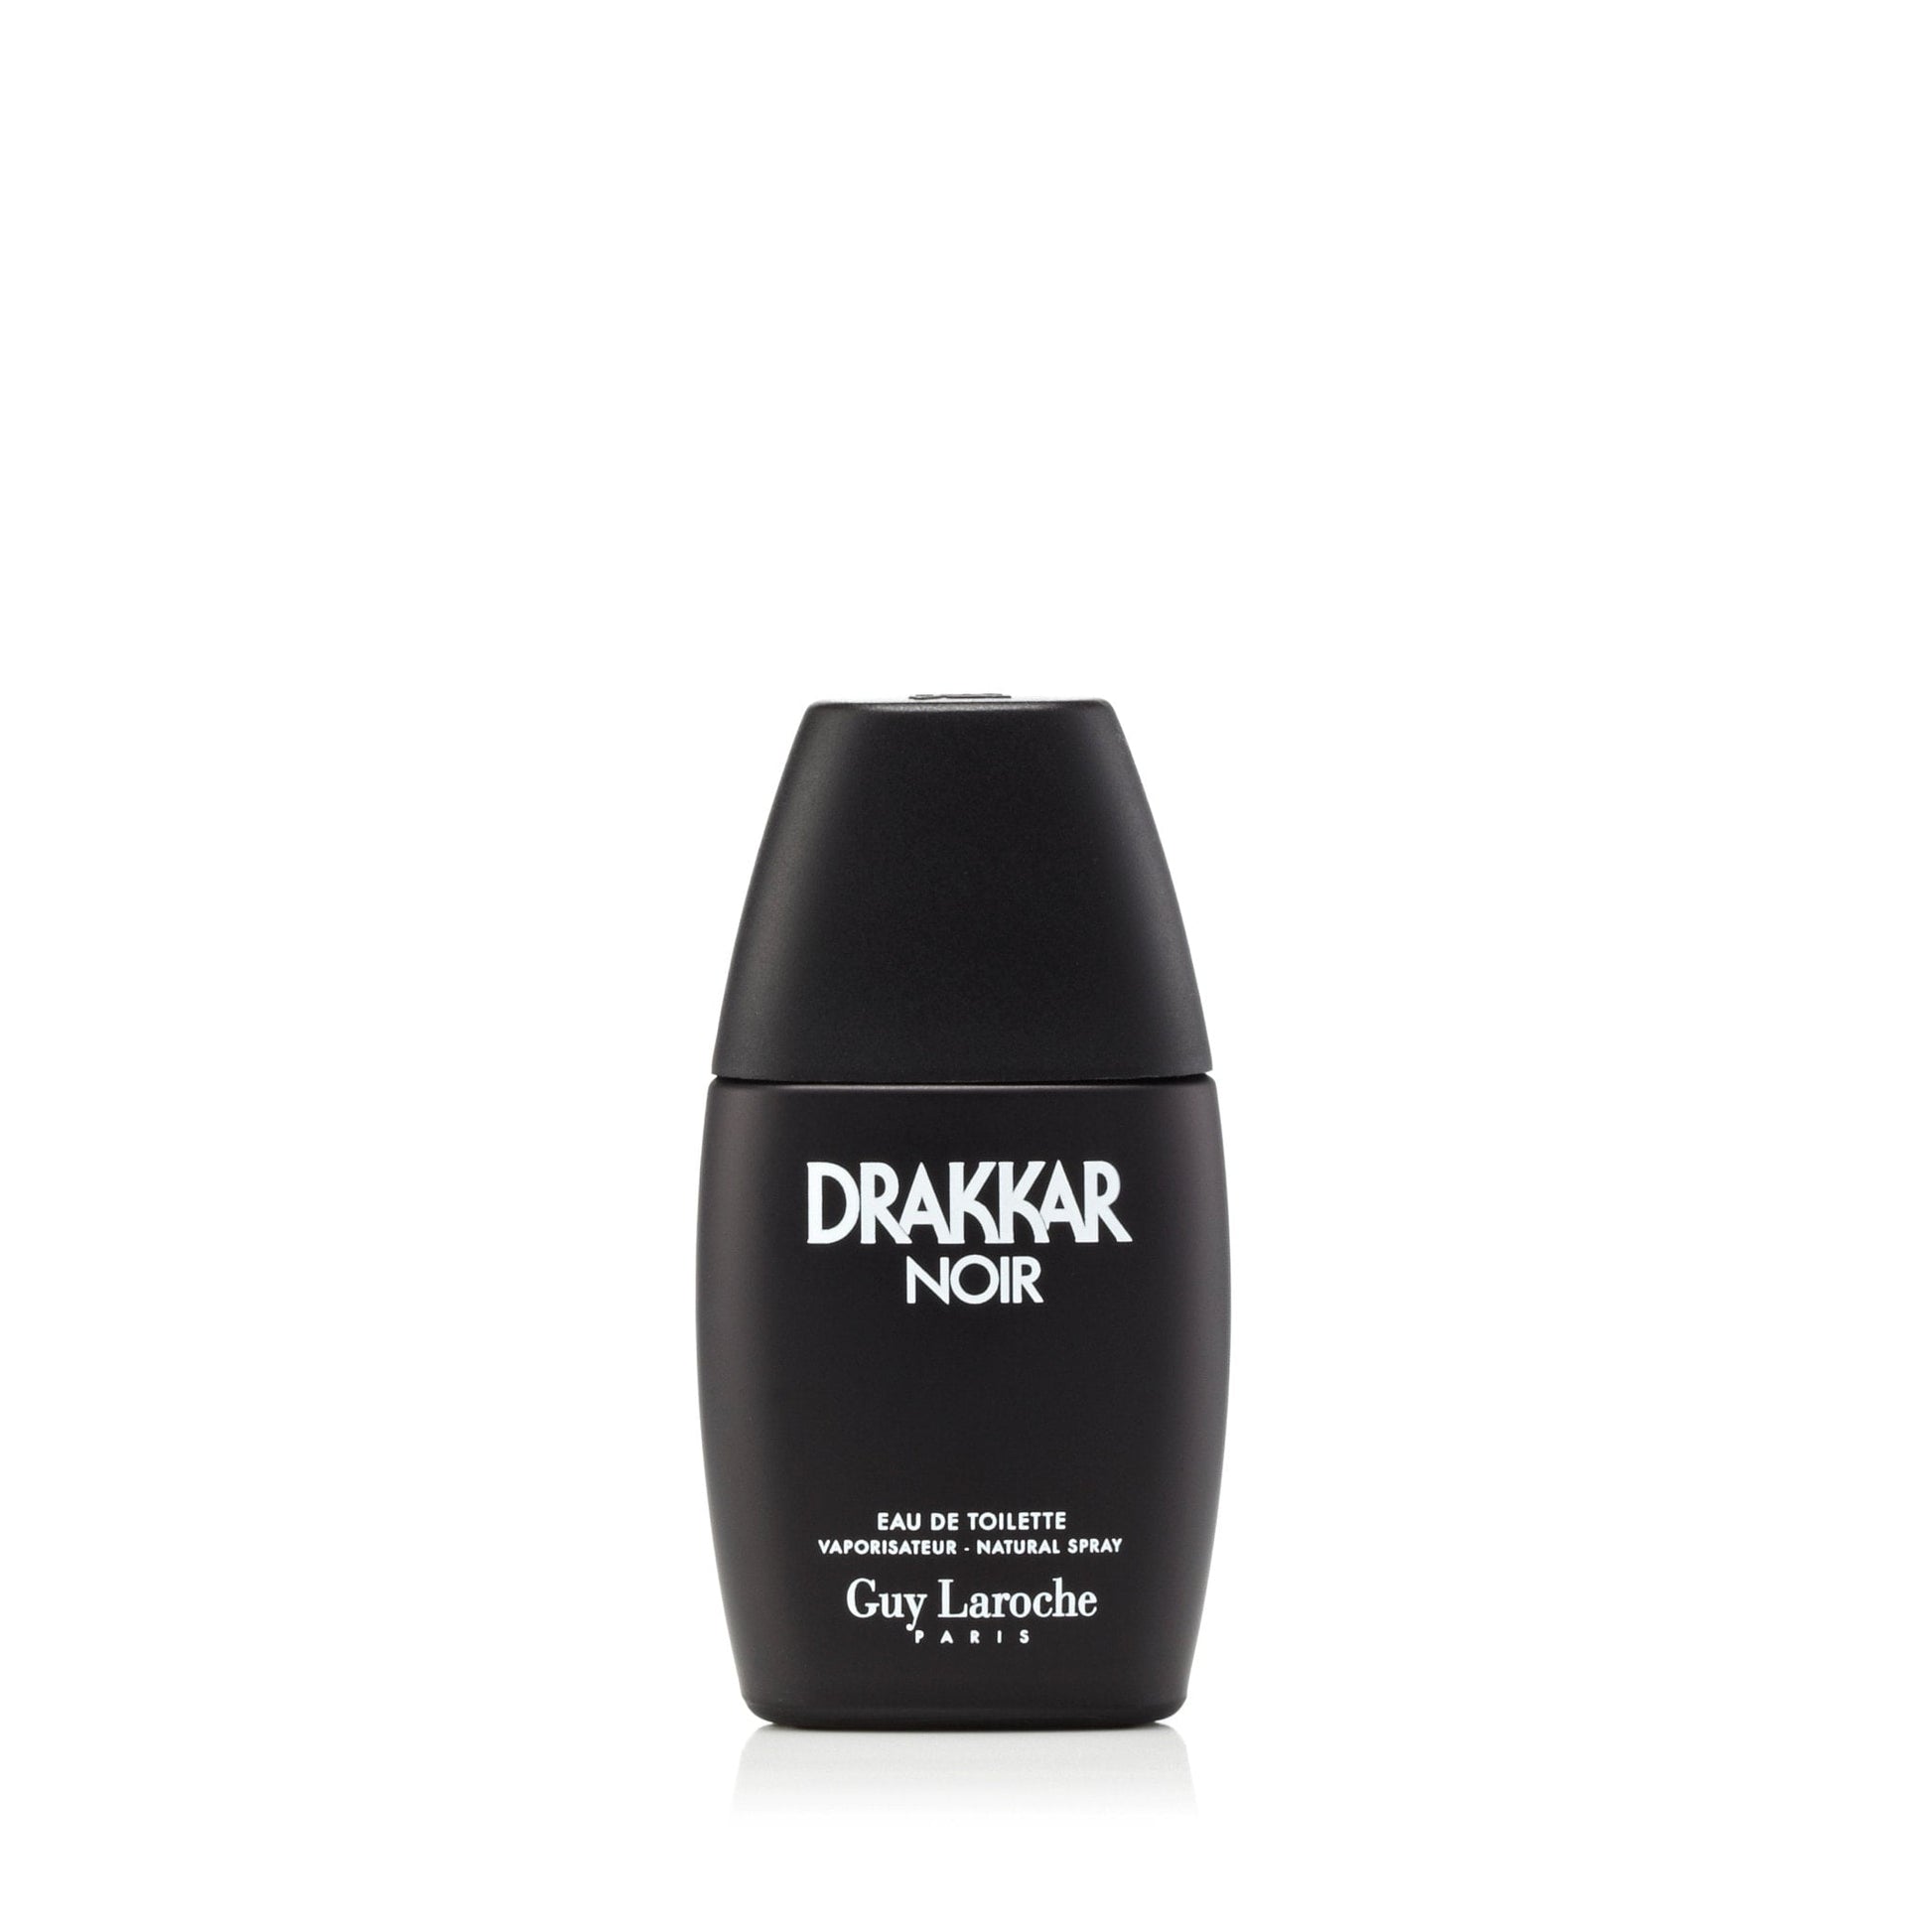 Drakkar Noir Eau de Toilette Spray for Men by Guy Laroche, Product image 2